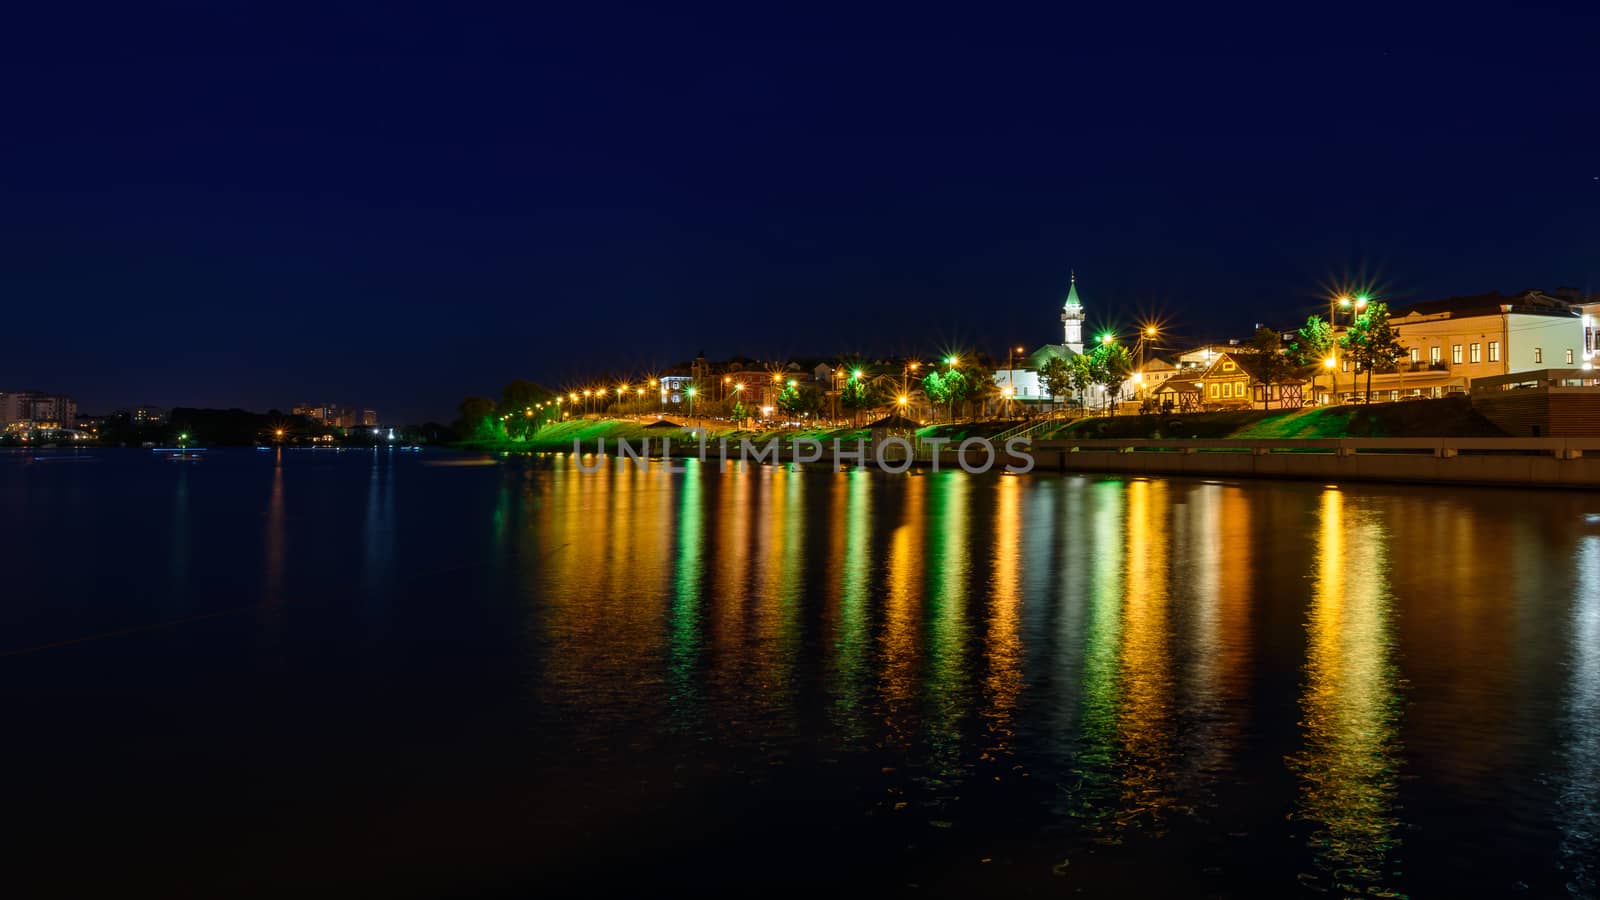 The city of Kazan during a beautiful summer night with multicolor illumination by Seva_blsv